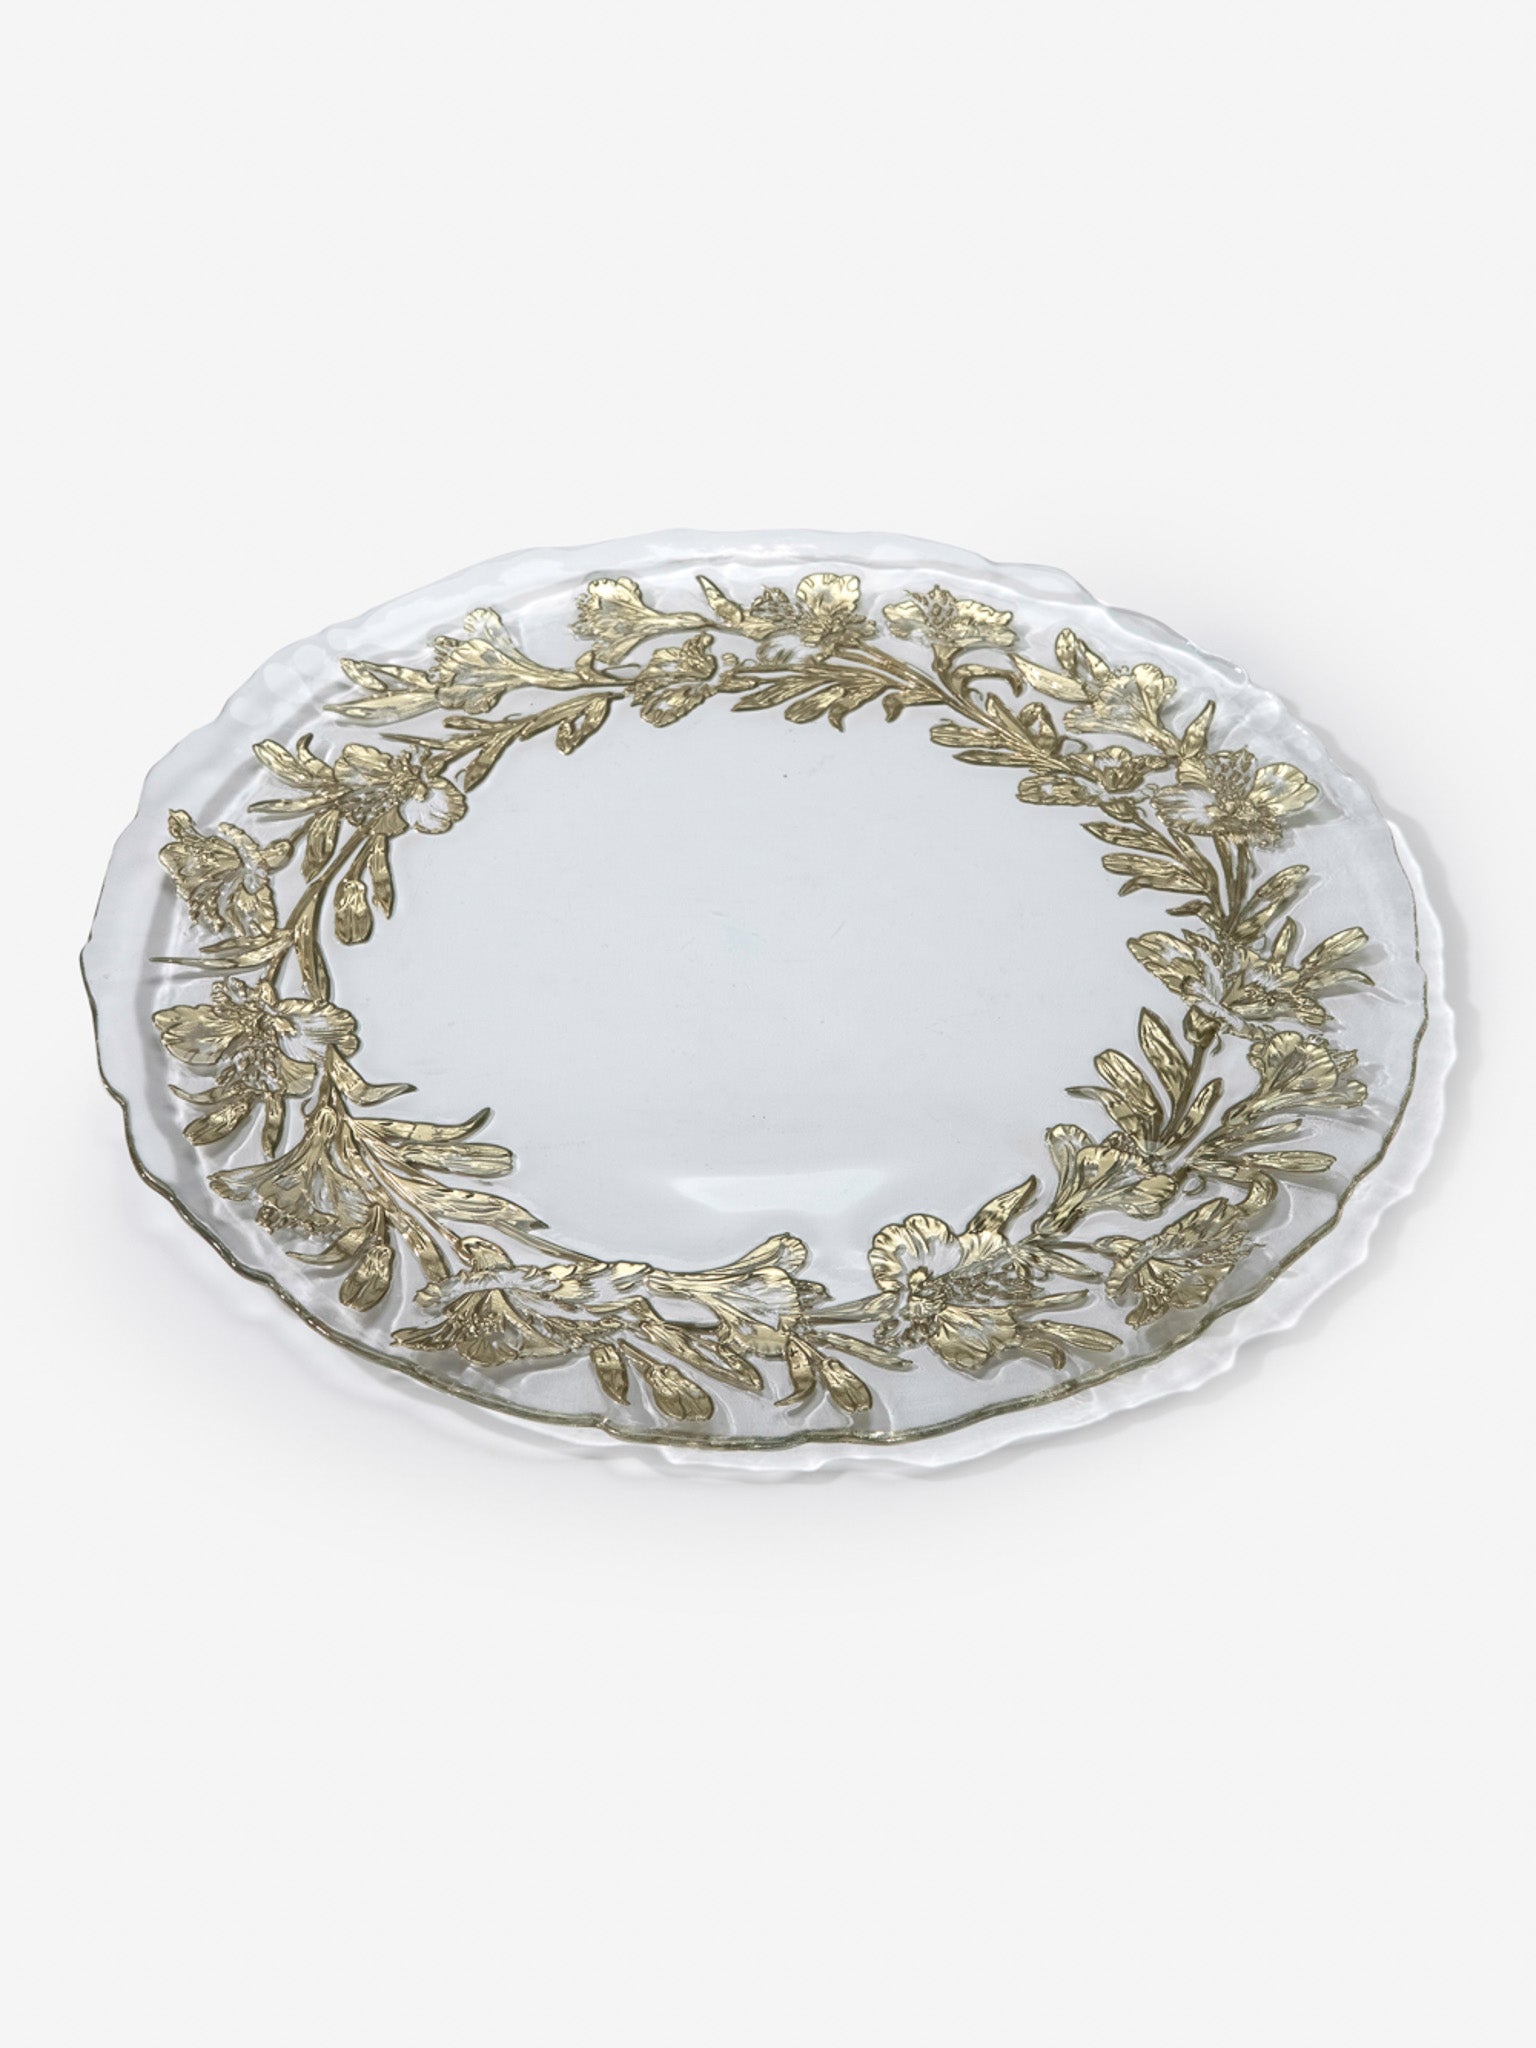 Flori Glass serving Plate